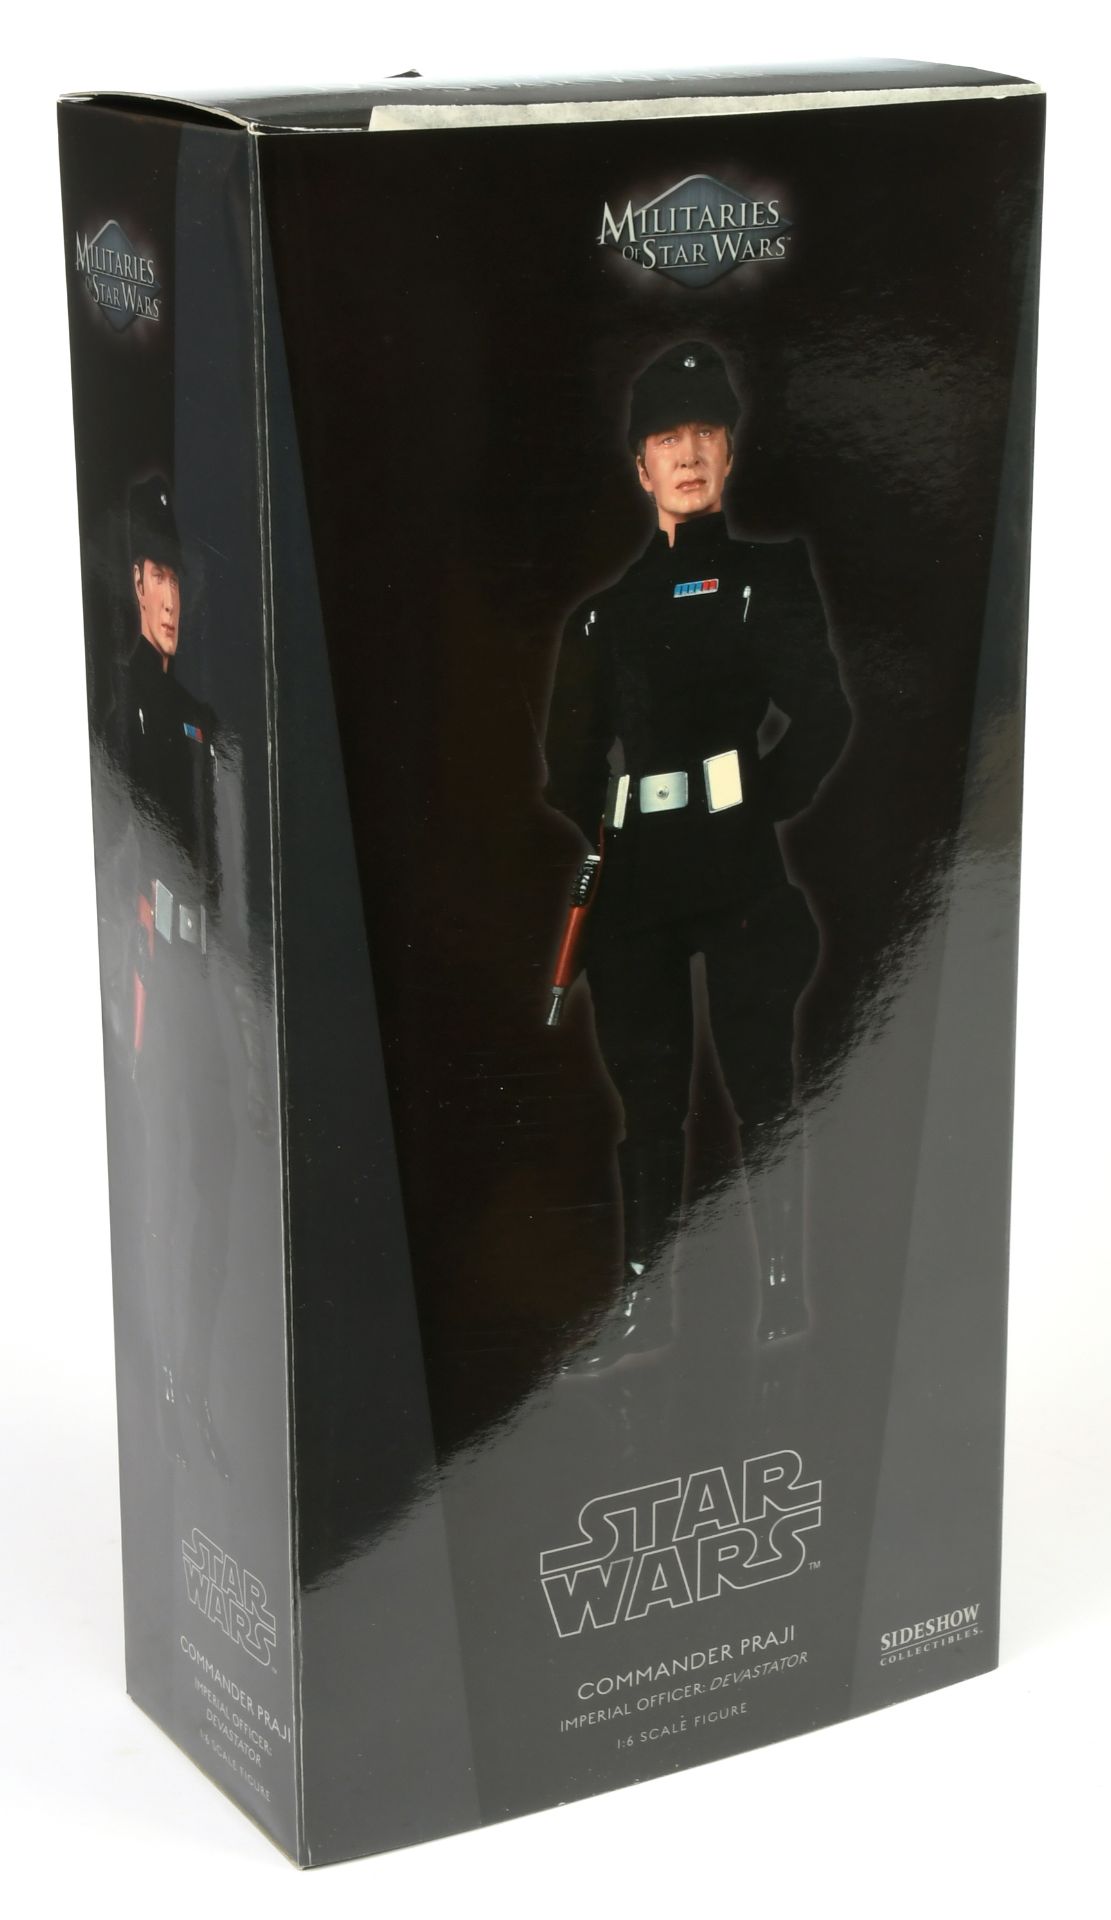 Sideshow Star Wars Commander Praji 1:6th scale figure - Image 2 of 2